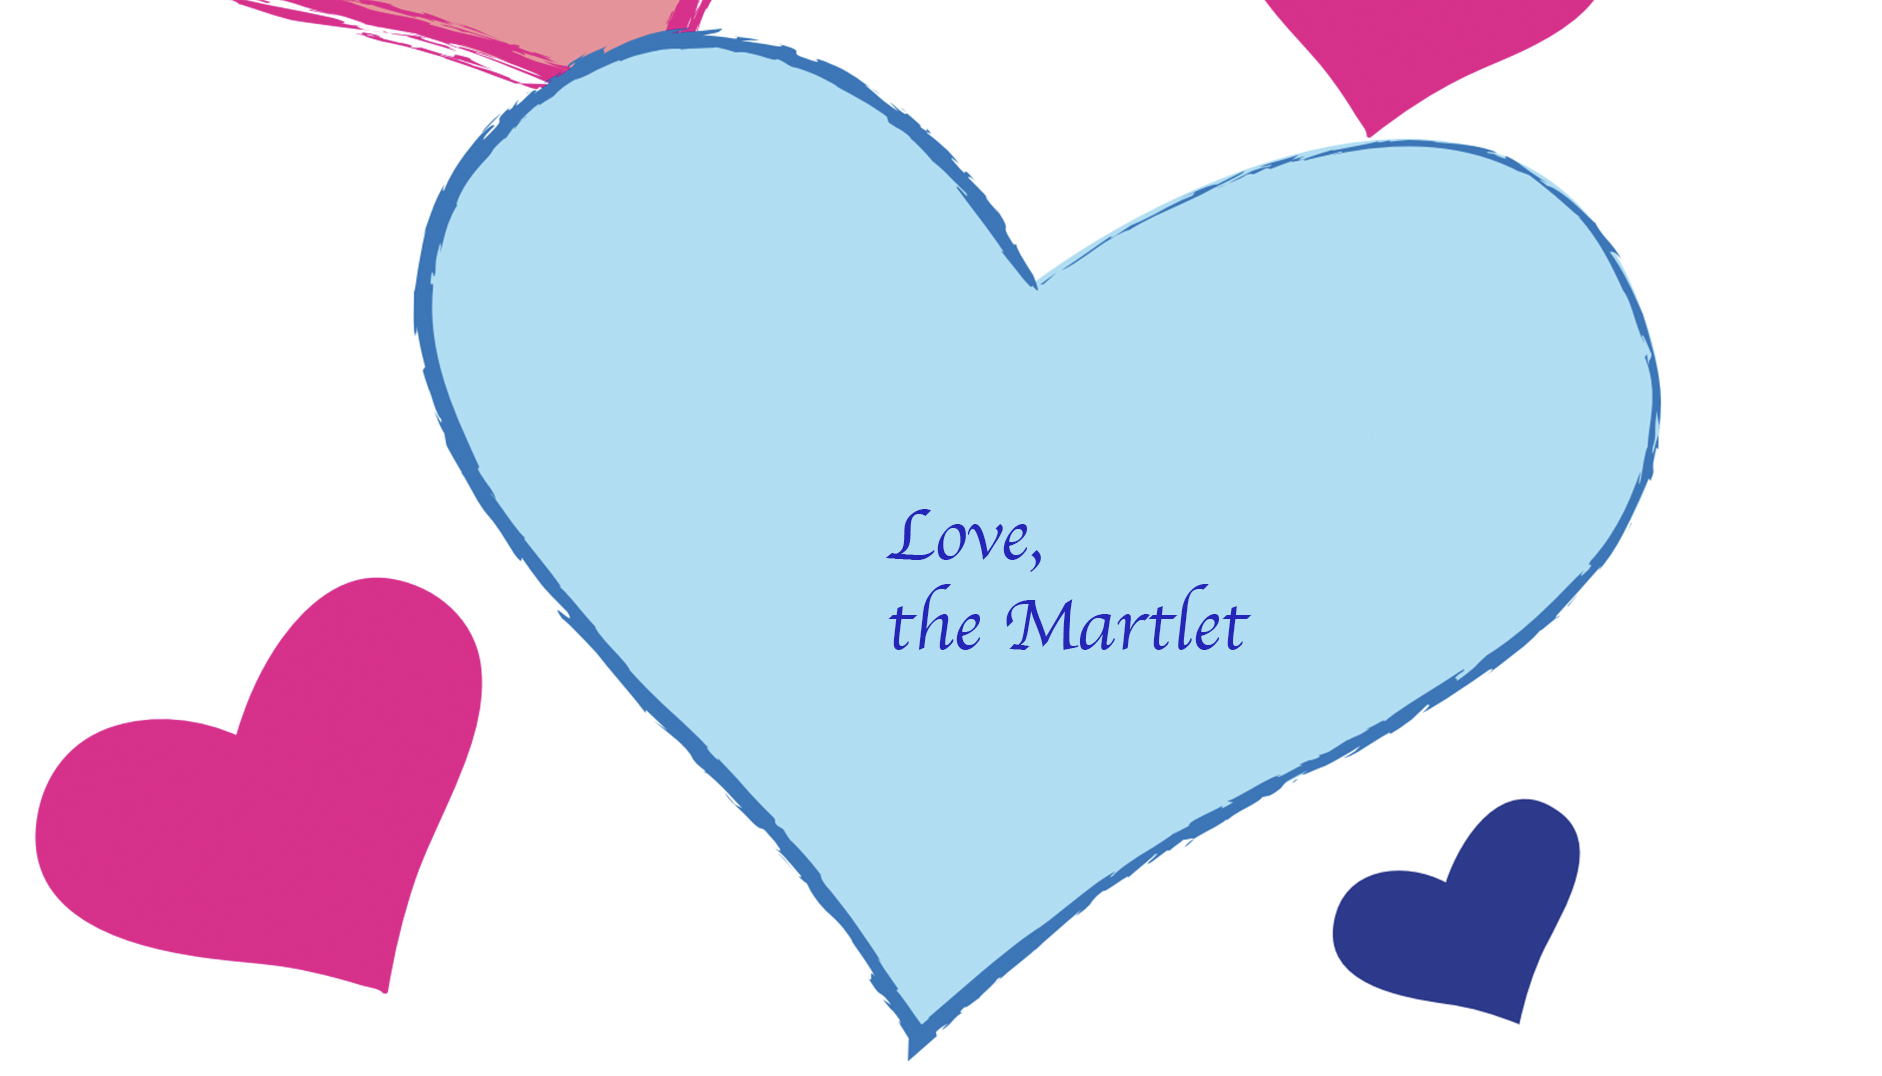 The Martlet’s valentines